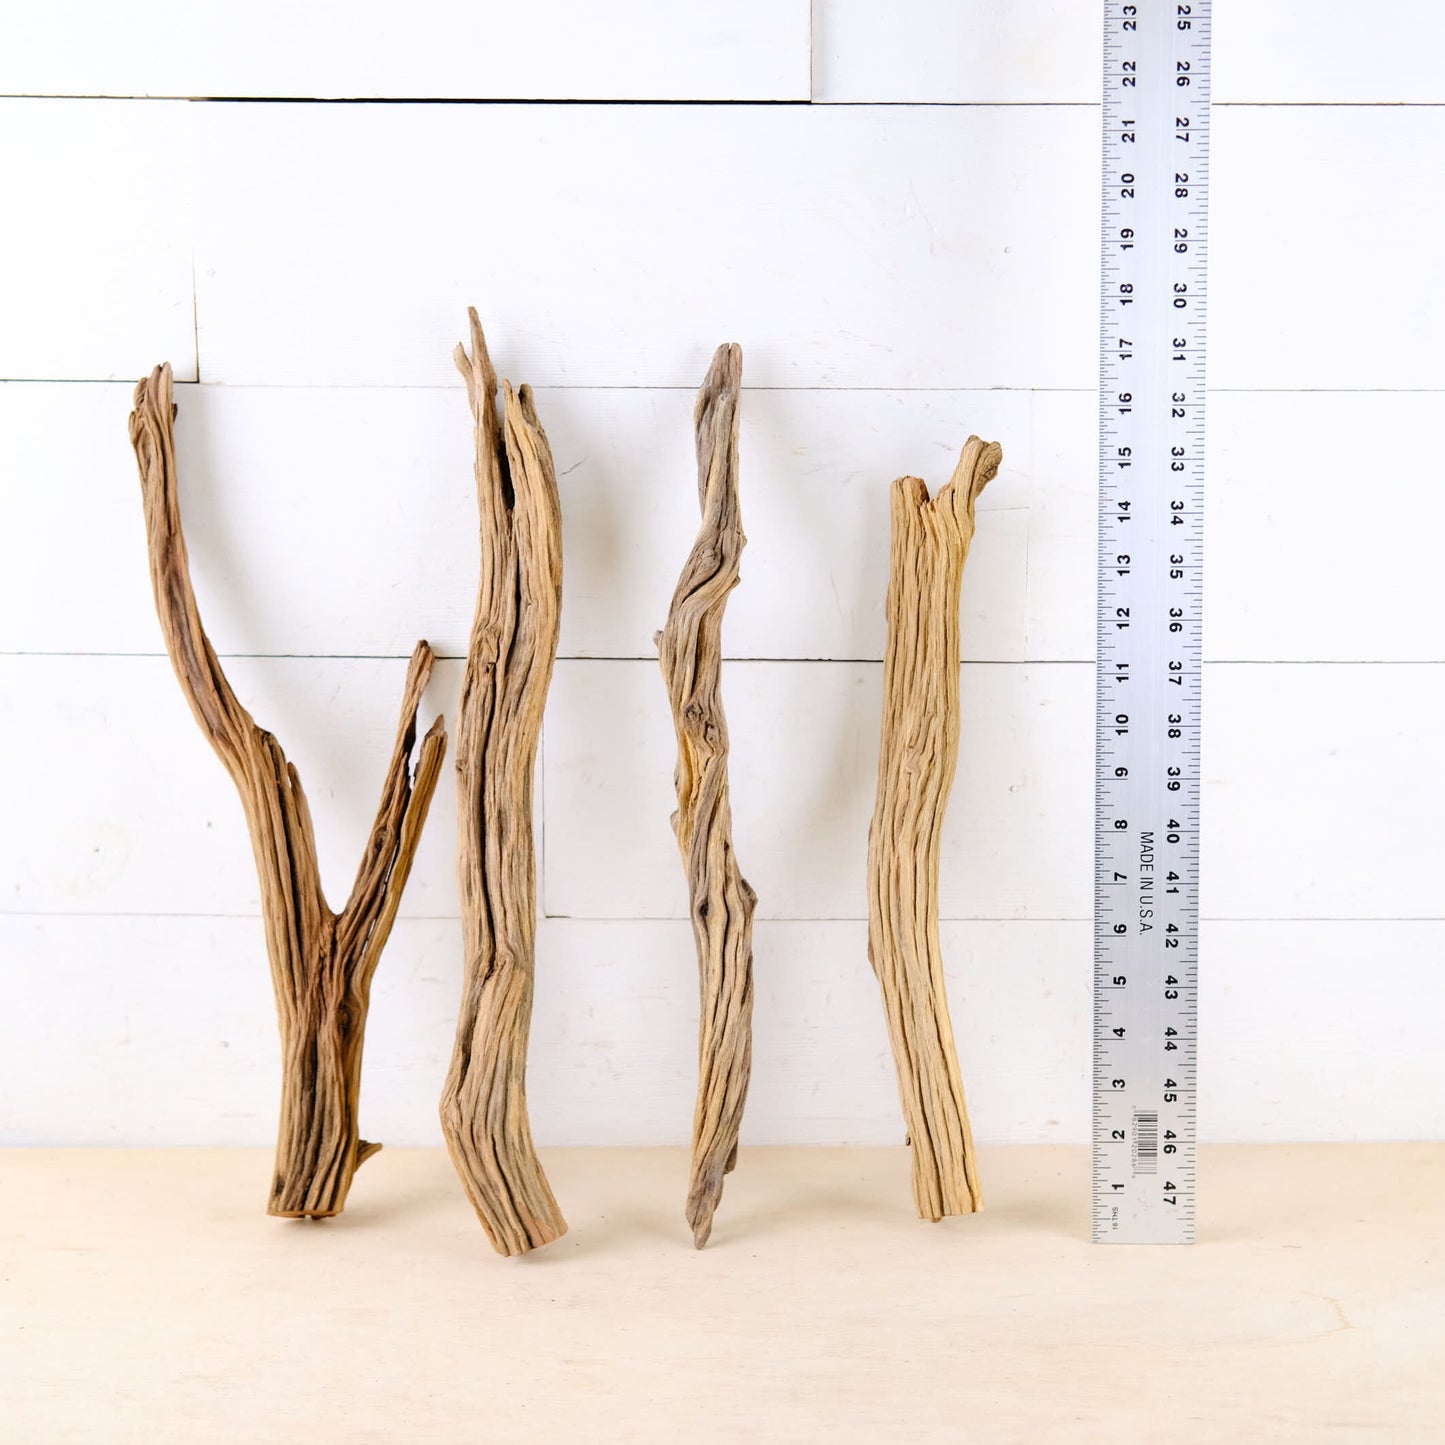 15-18 Manzanita Driftwood Sticks (Set of 4), Aquarium Wood Pieces, Island Aquascape Decor, Weathered Manzanita Chunks, Craft Driftwood